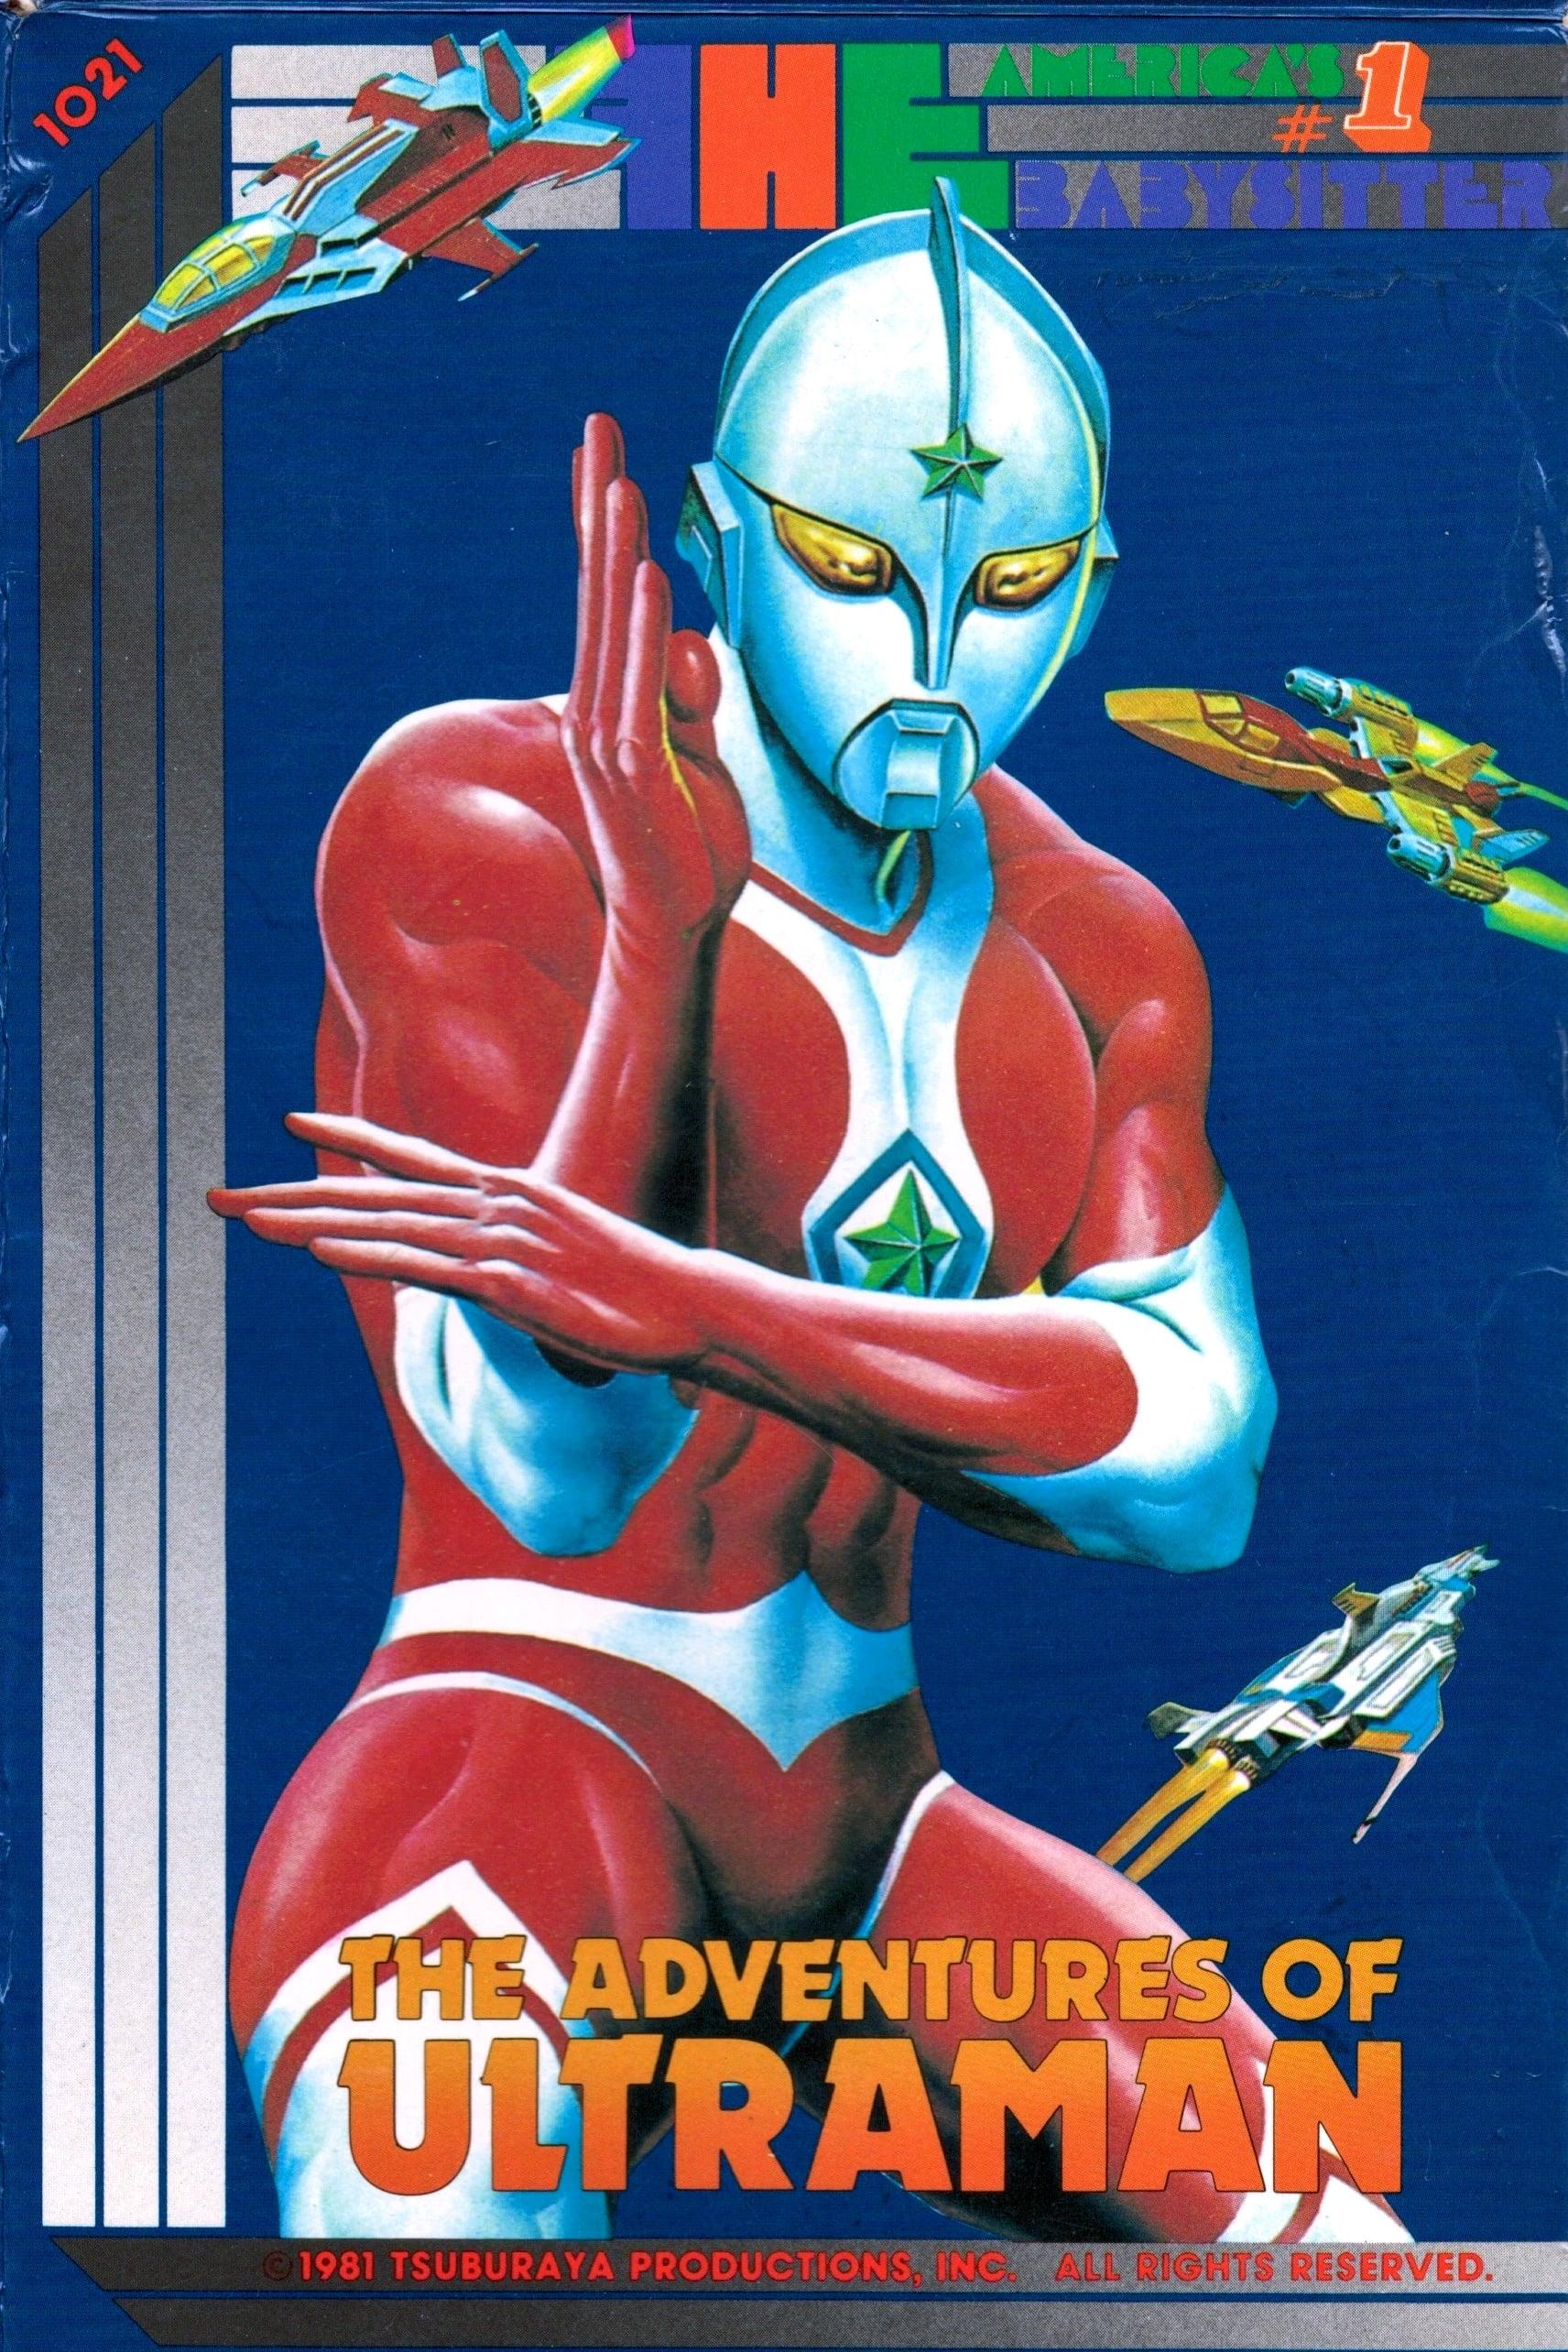 The Adventures of Ultraman poster